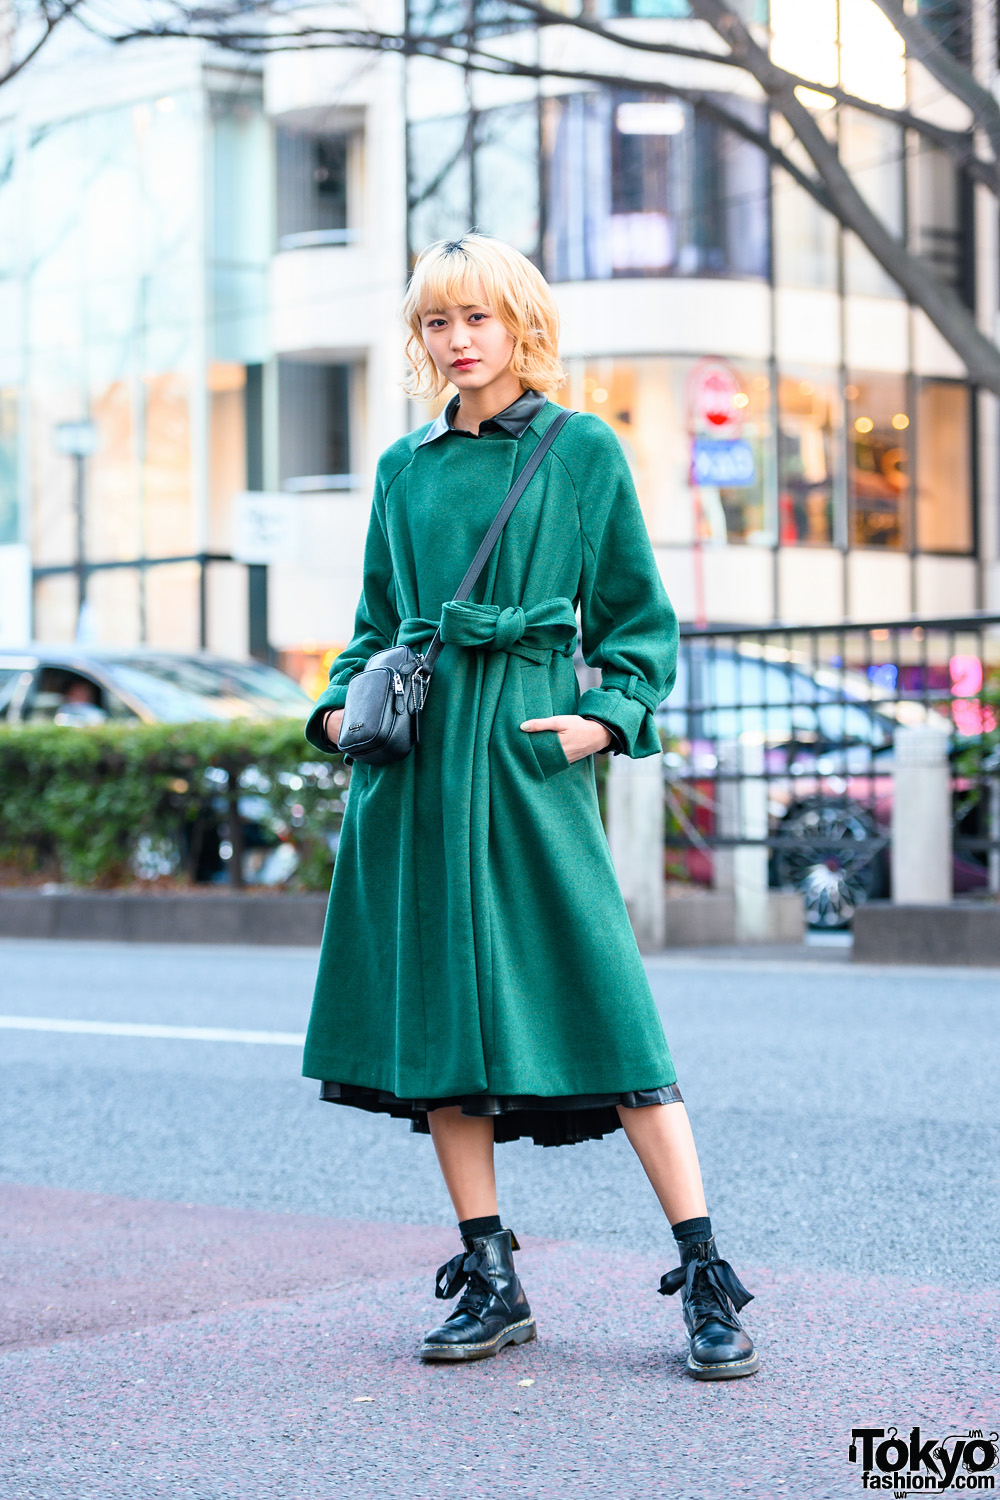 Japanese Model in Minimalist Street Style w/ Murua Belted Coat, Zara Faux Leather Dress, Coach Bag & Dr. Martens Boots